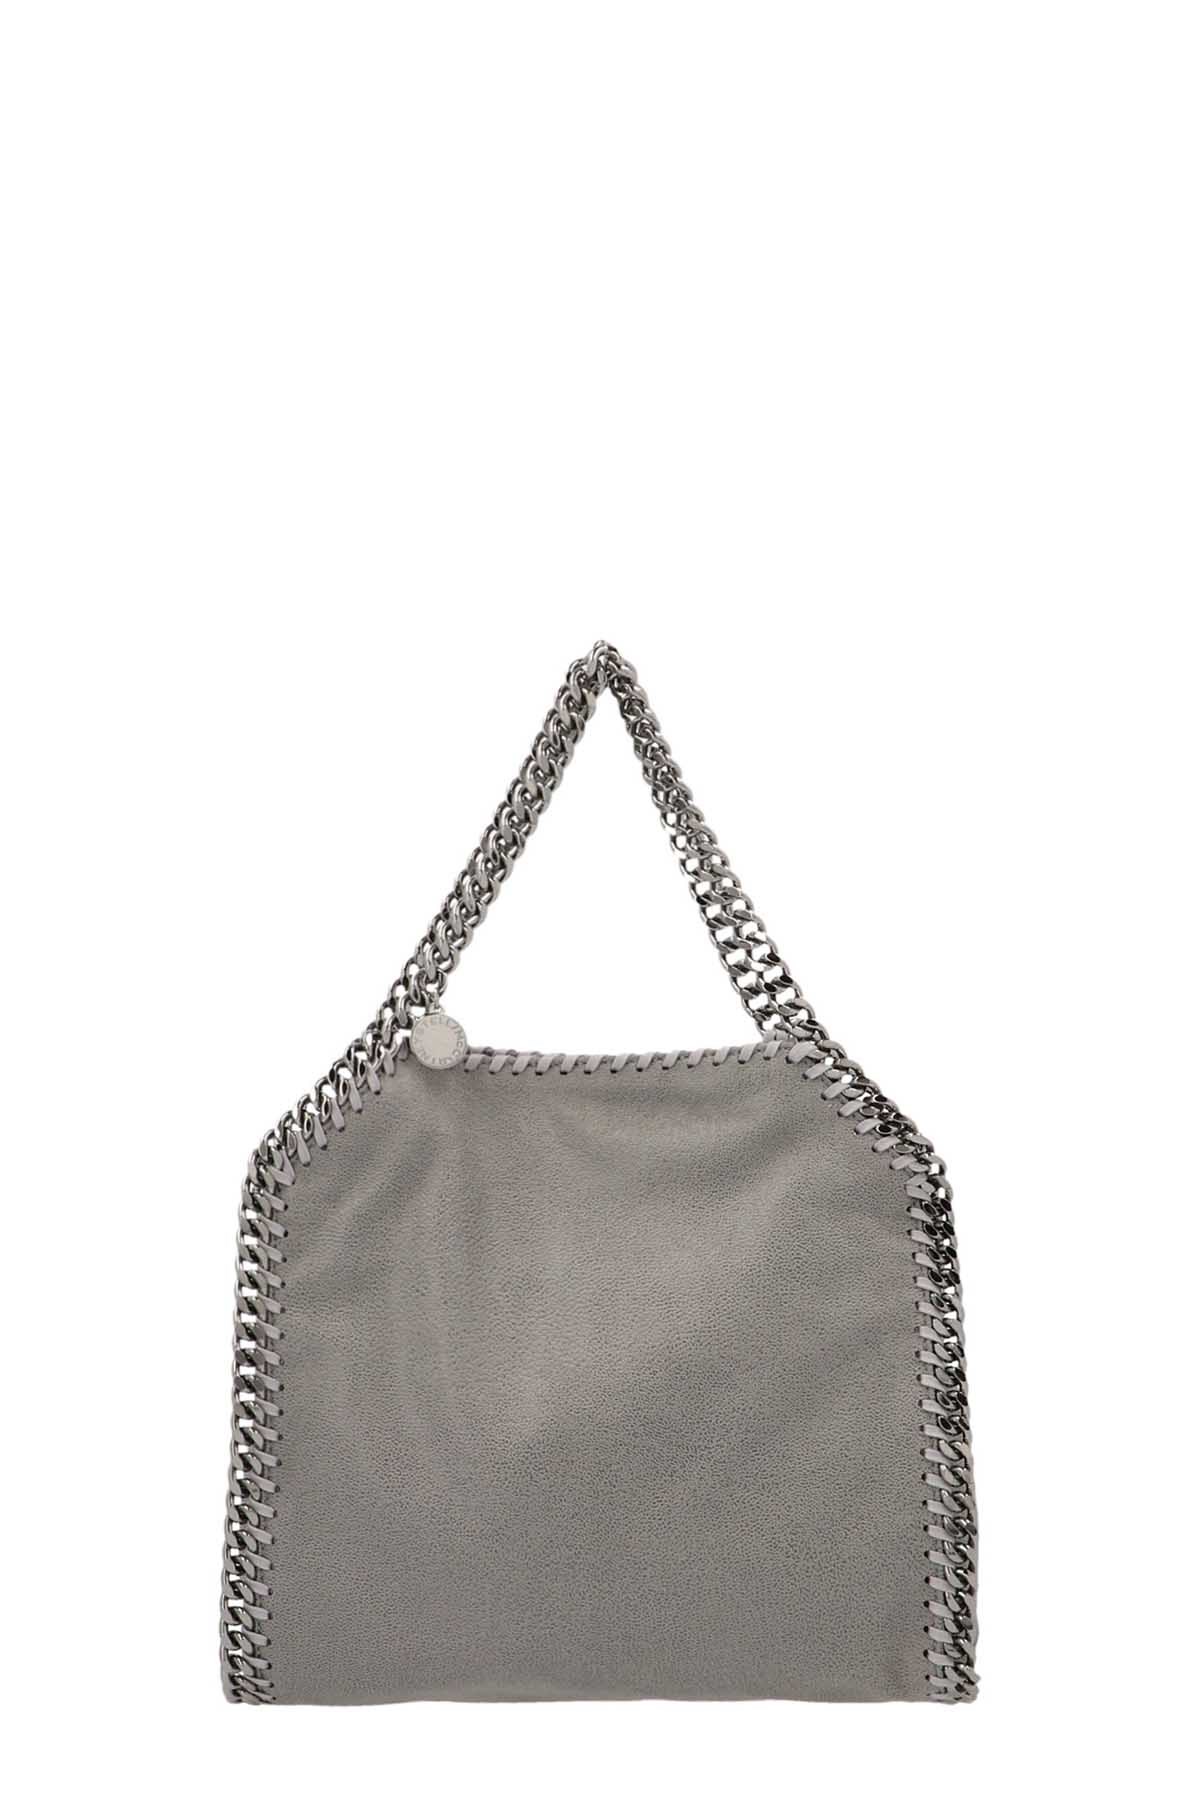 STELLA MCCARTNEY 'Falabella' Mini Handbag